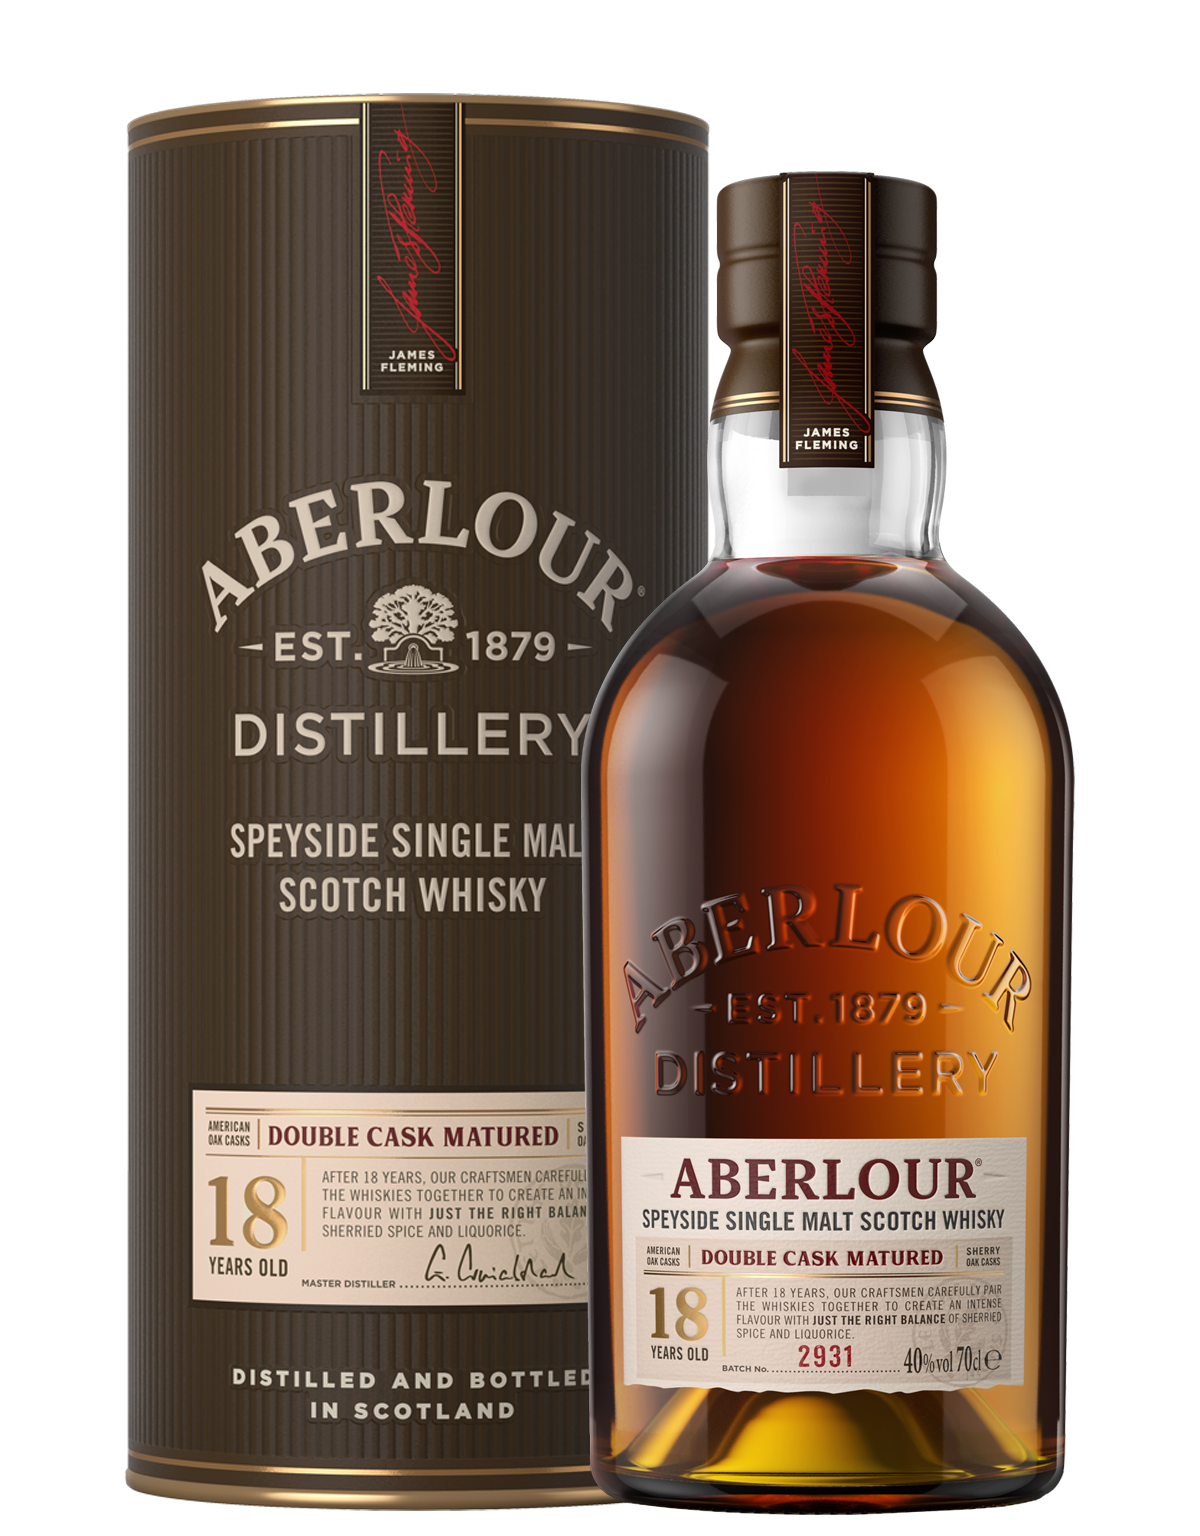 Aberlour 18 years old Highland Single Malt Scotch Whisky